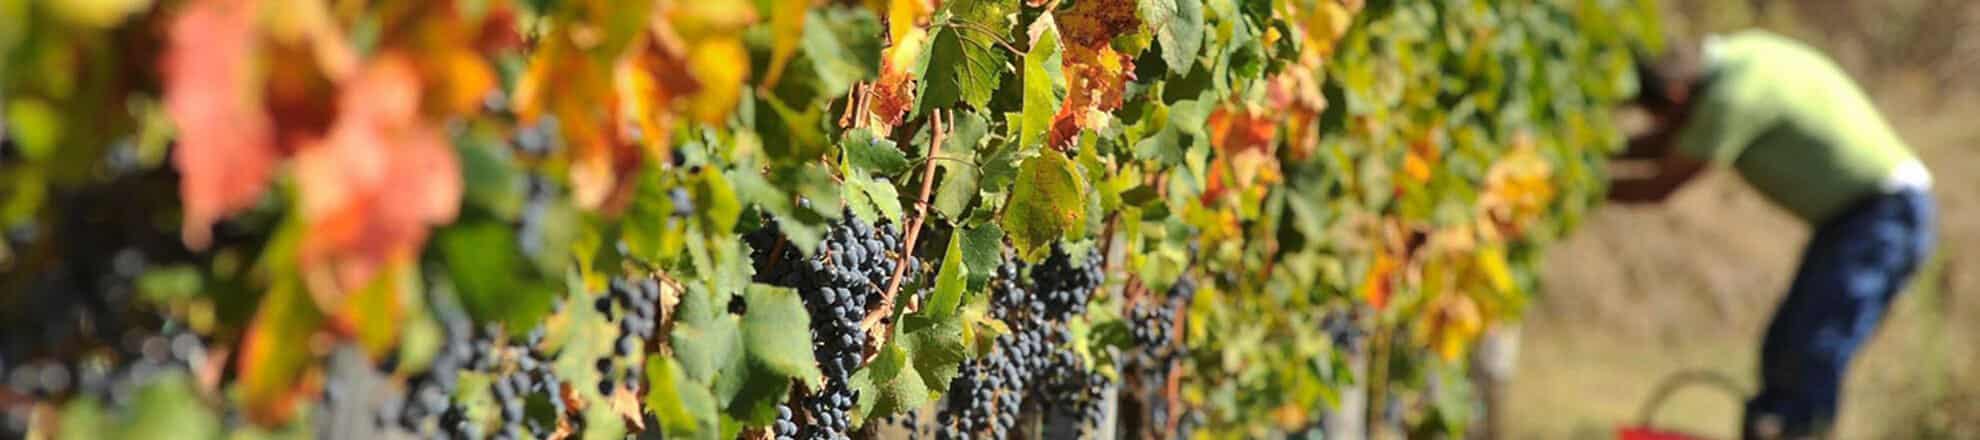 Toscana vinmark